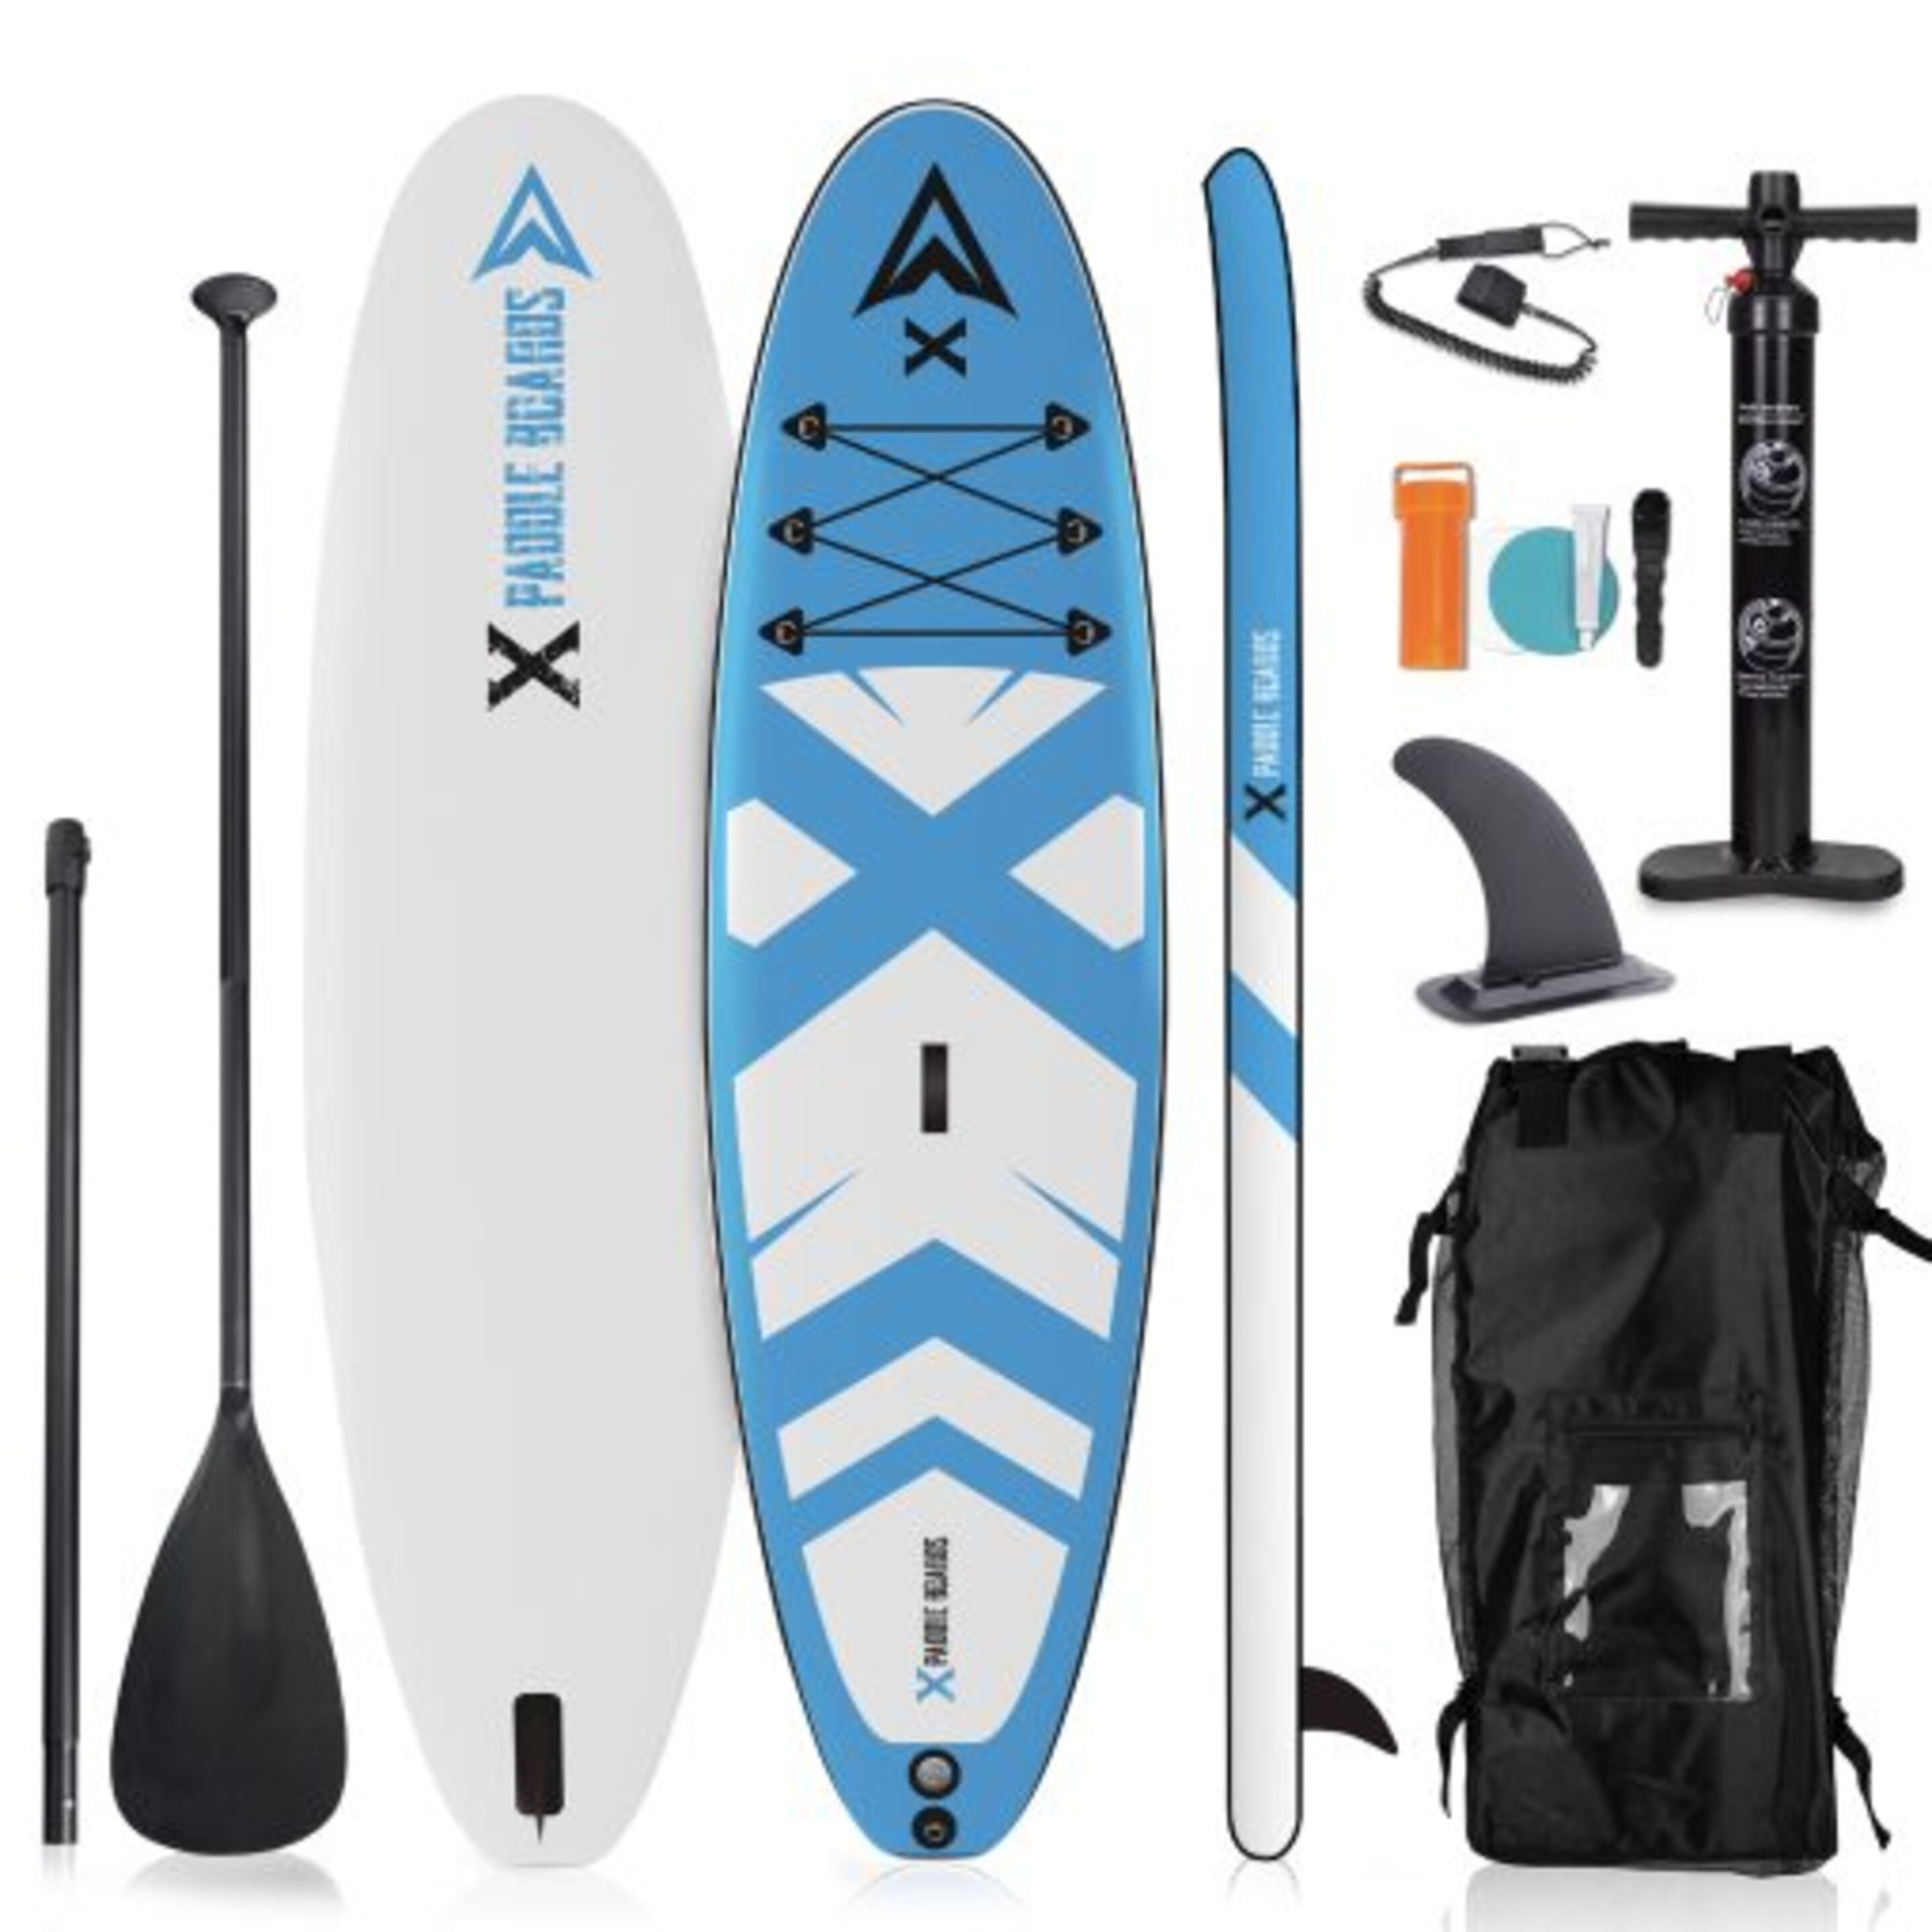 Tabla De Paddle Surf Hinchable  X-ite Kayak 320 X 82 X 15 Cm - Azul Aqua  MKP